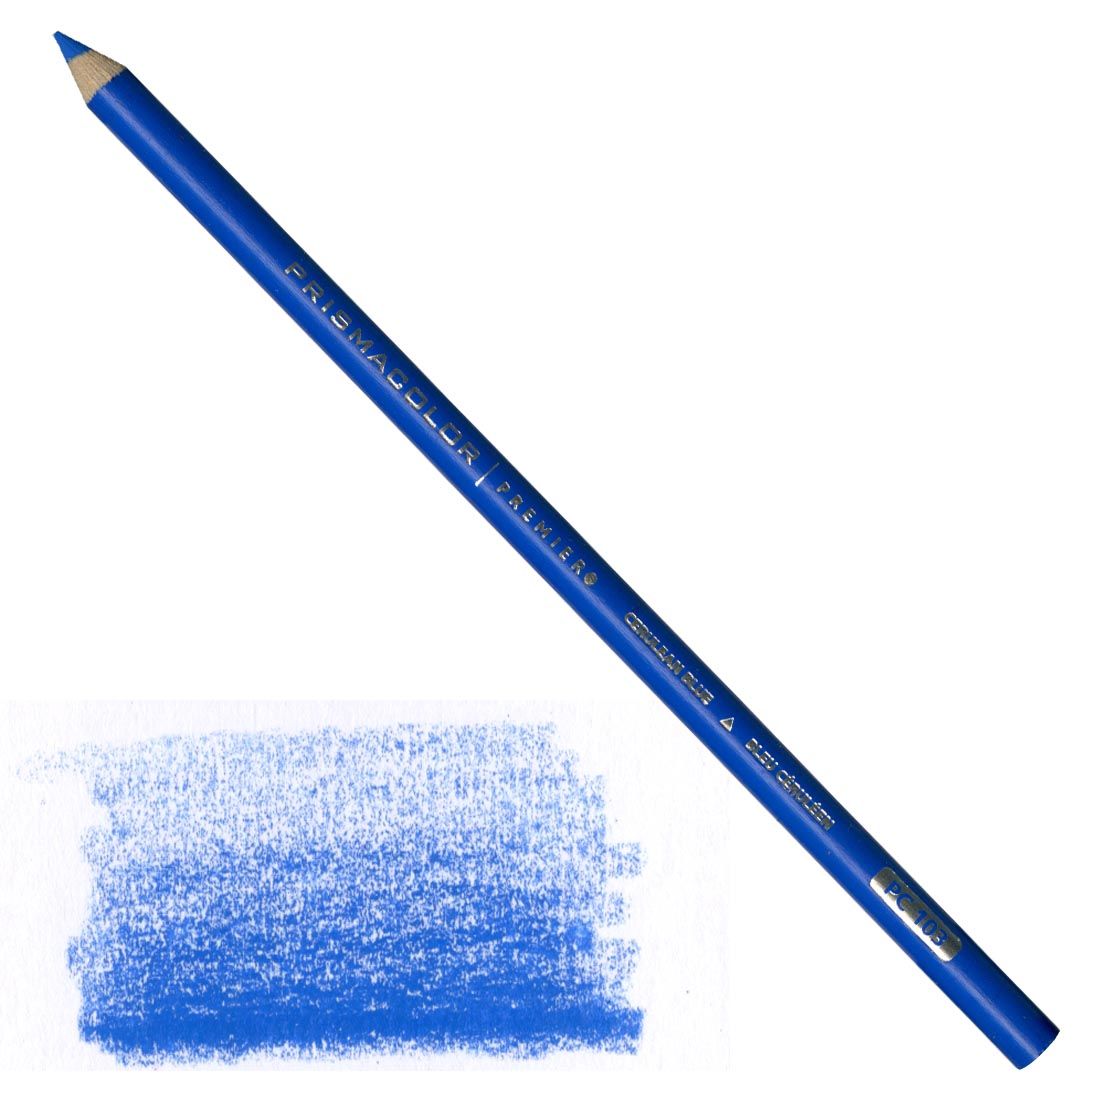 Cerulean Blue Prismacolor Premier Colored Pencil with a sample colored swatch